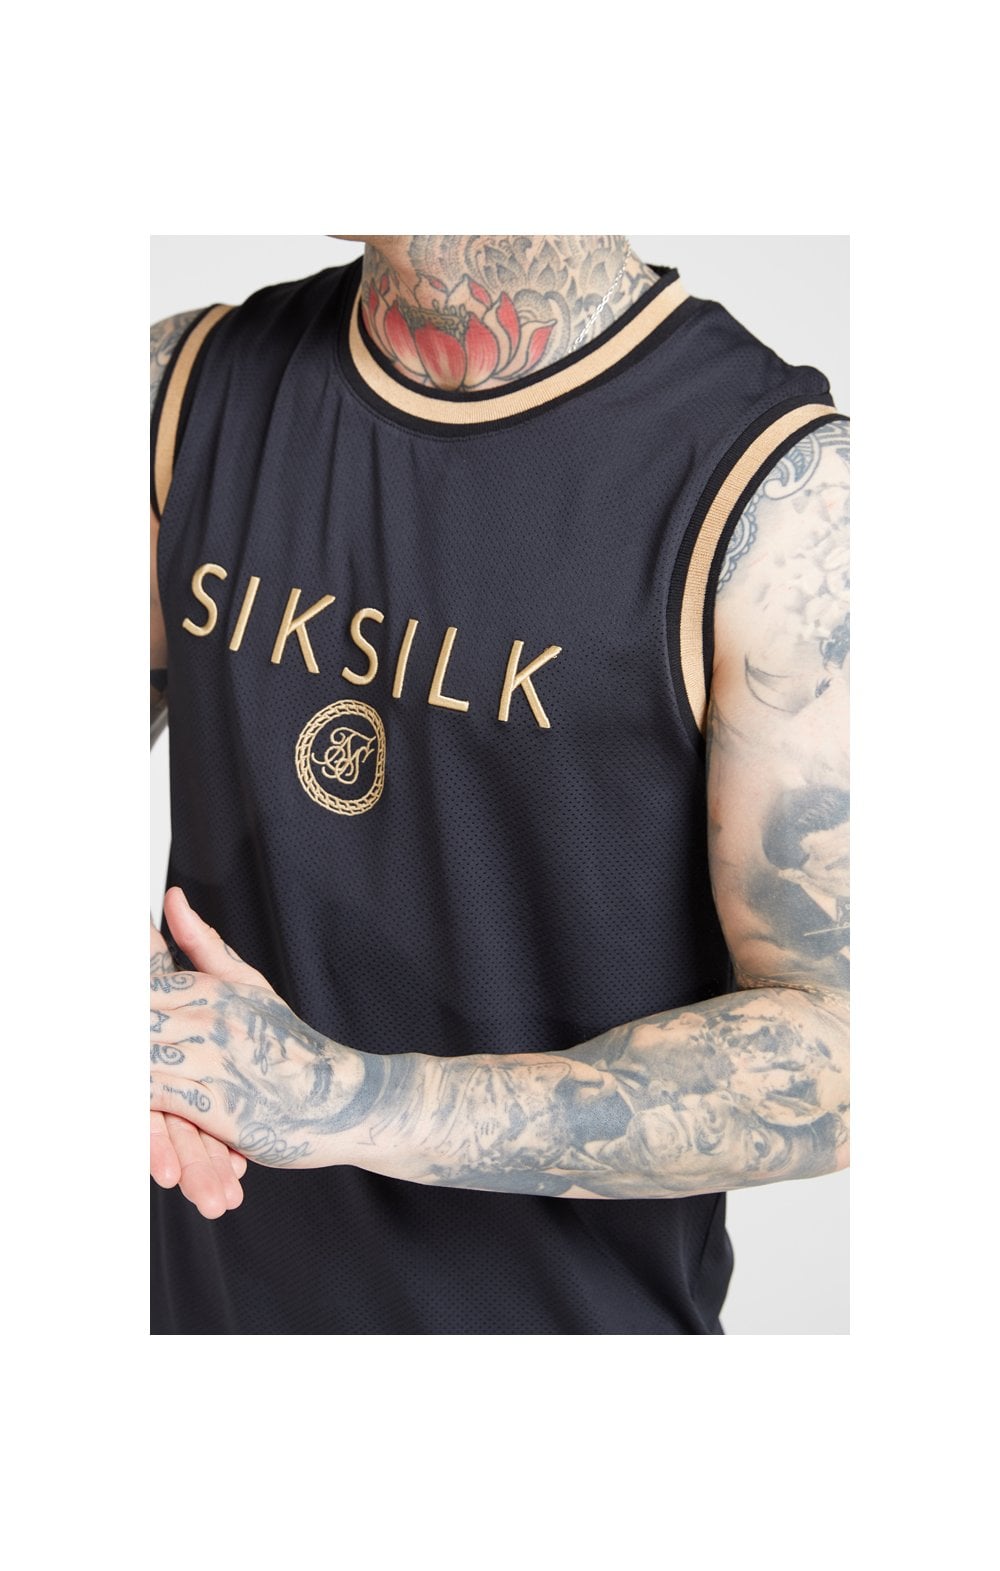 SikSilk BasketBall Vest - Black & Gold (1)